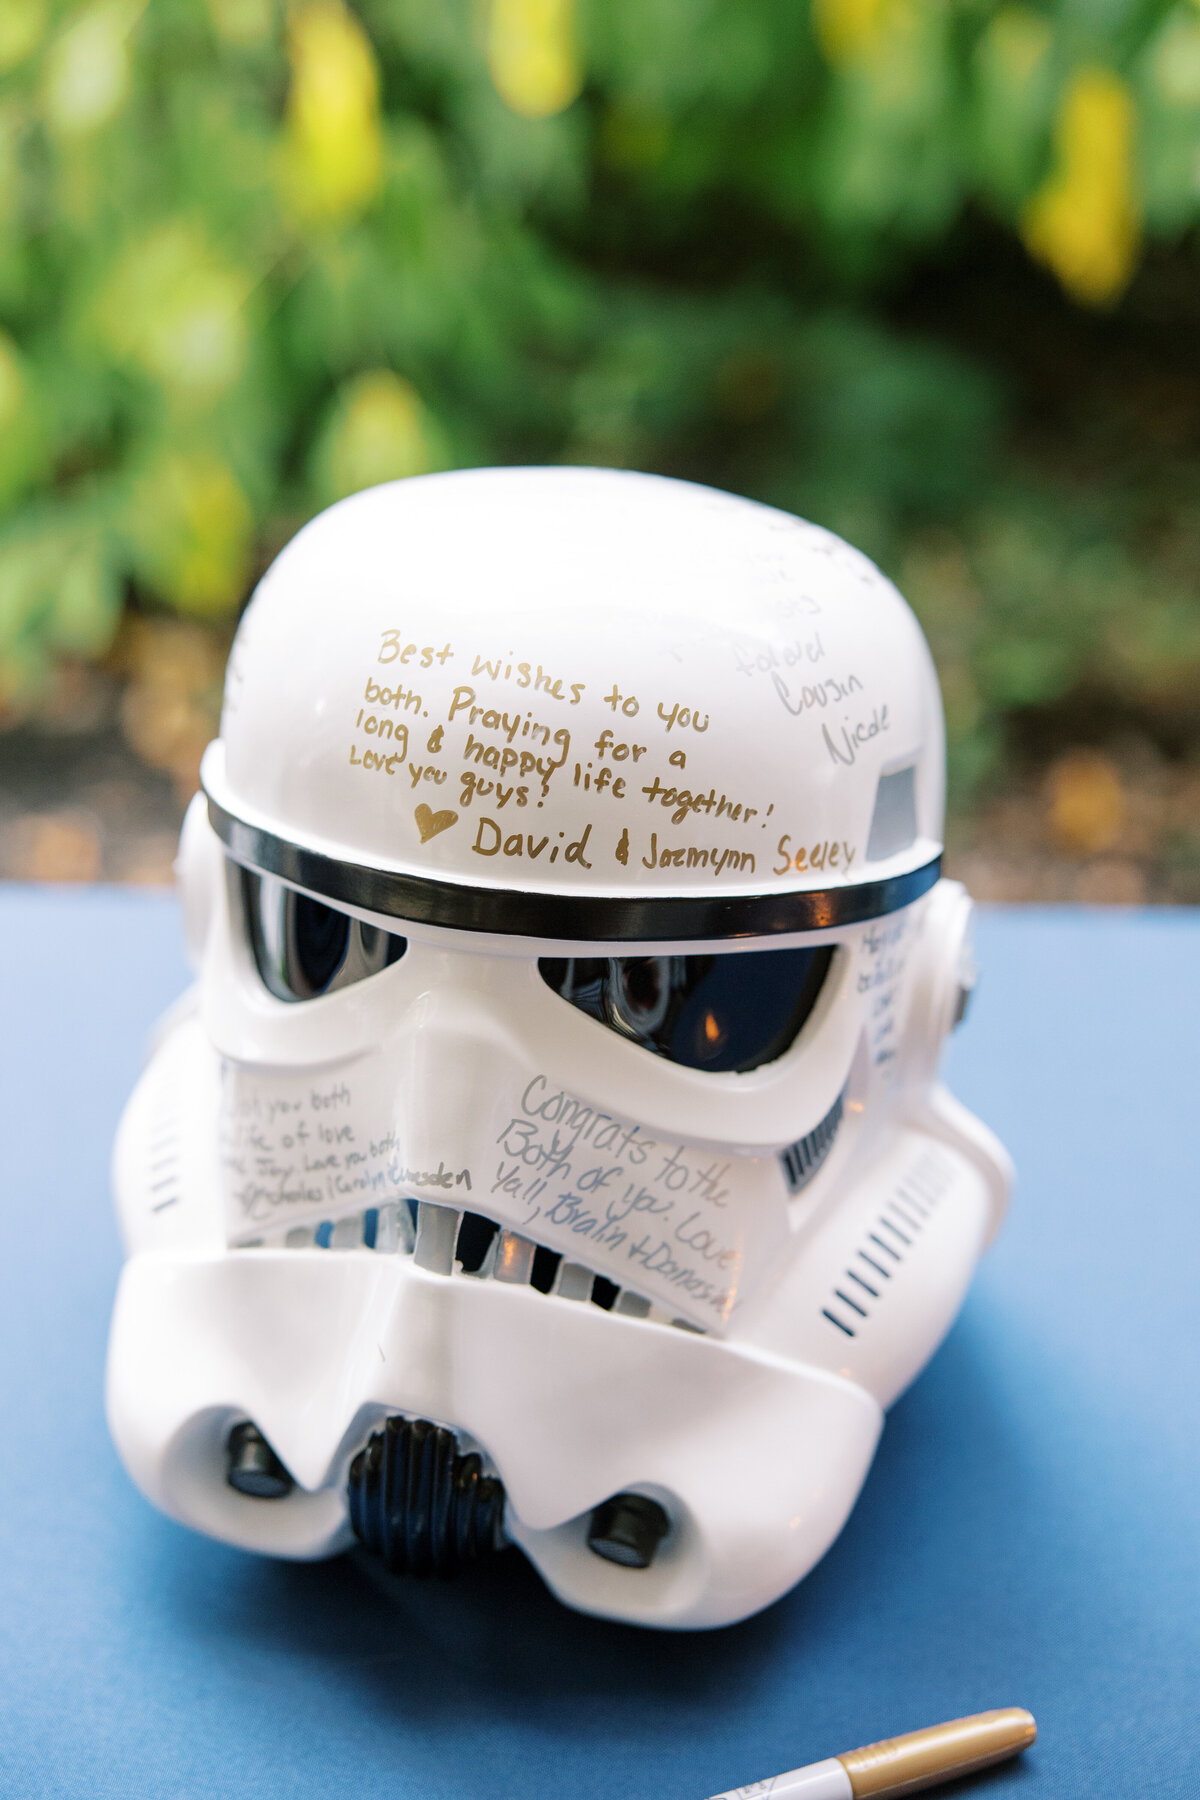 Star Wars storm trooper helmet